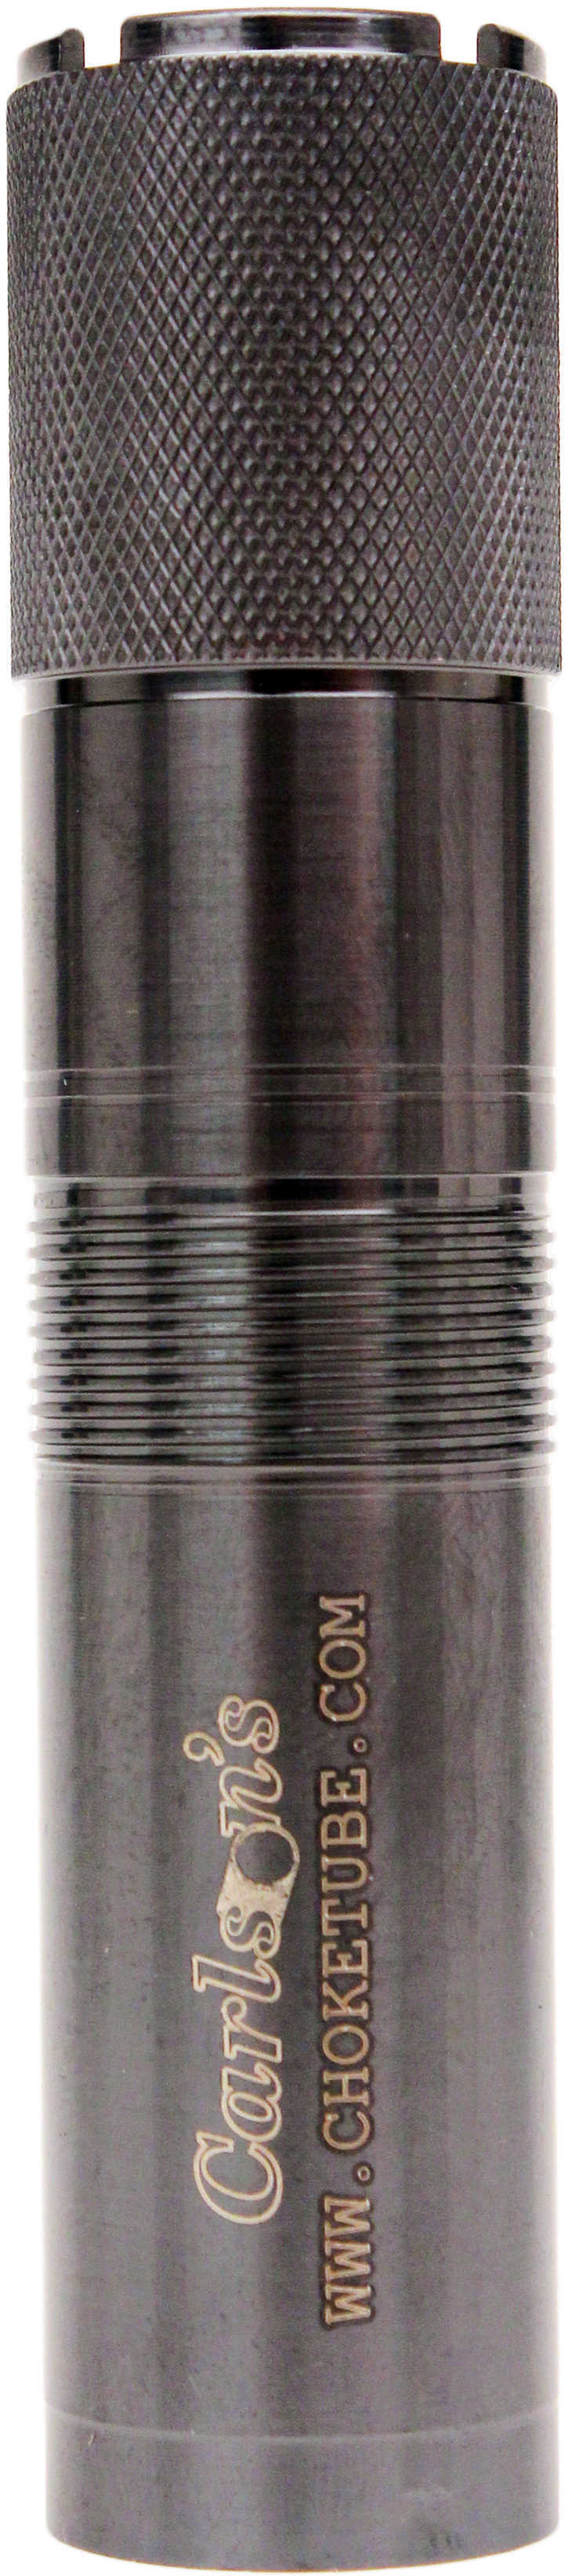 Carlsons 09010 Black Cloud Benelli Crio Plus 12 Gauge Mid-Range Steel Titanium Coated